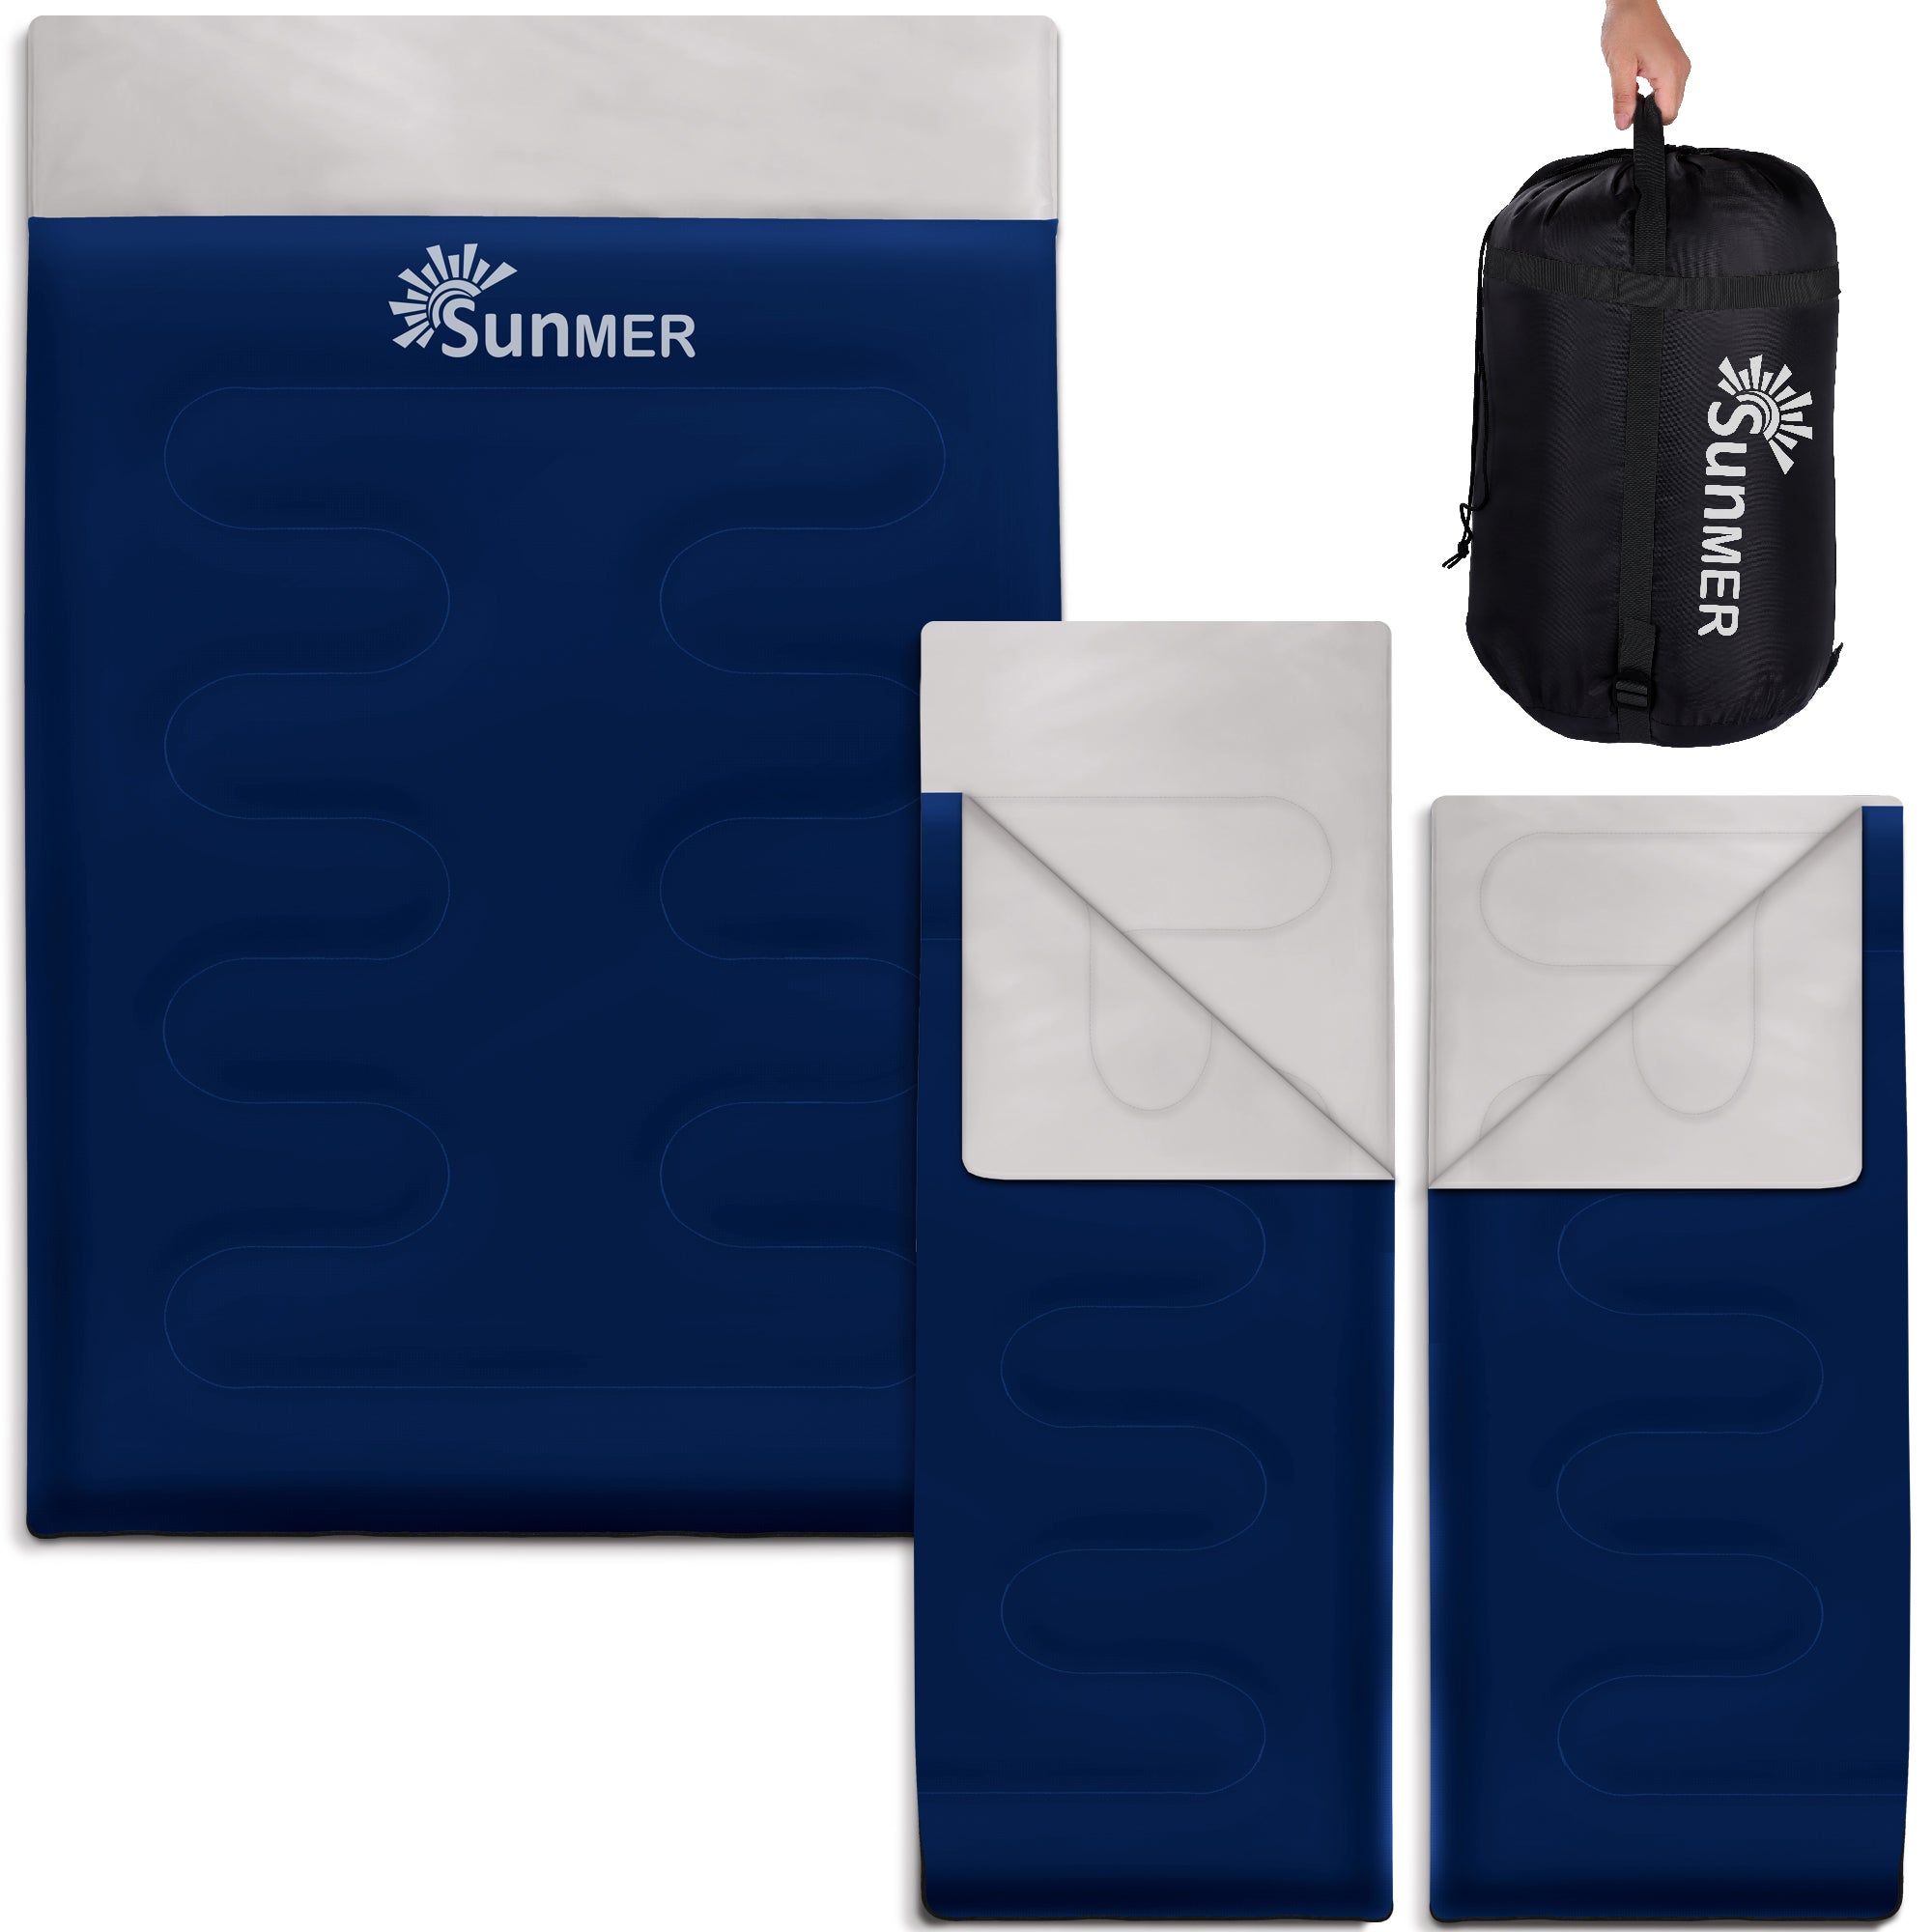 SUNMER Double Sleeping Bag - Converts into 2 Single Sleeping Bags - 4 Season 300gsm - Navy